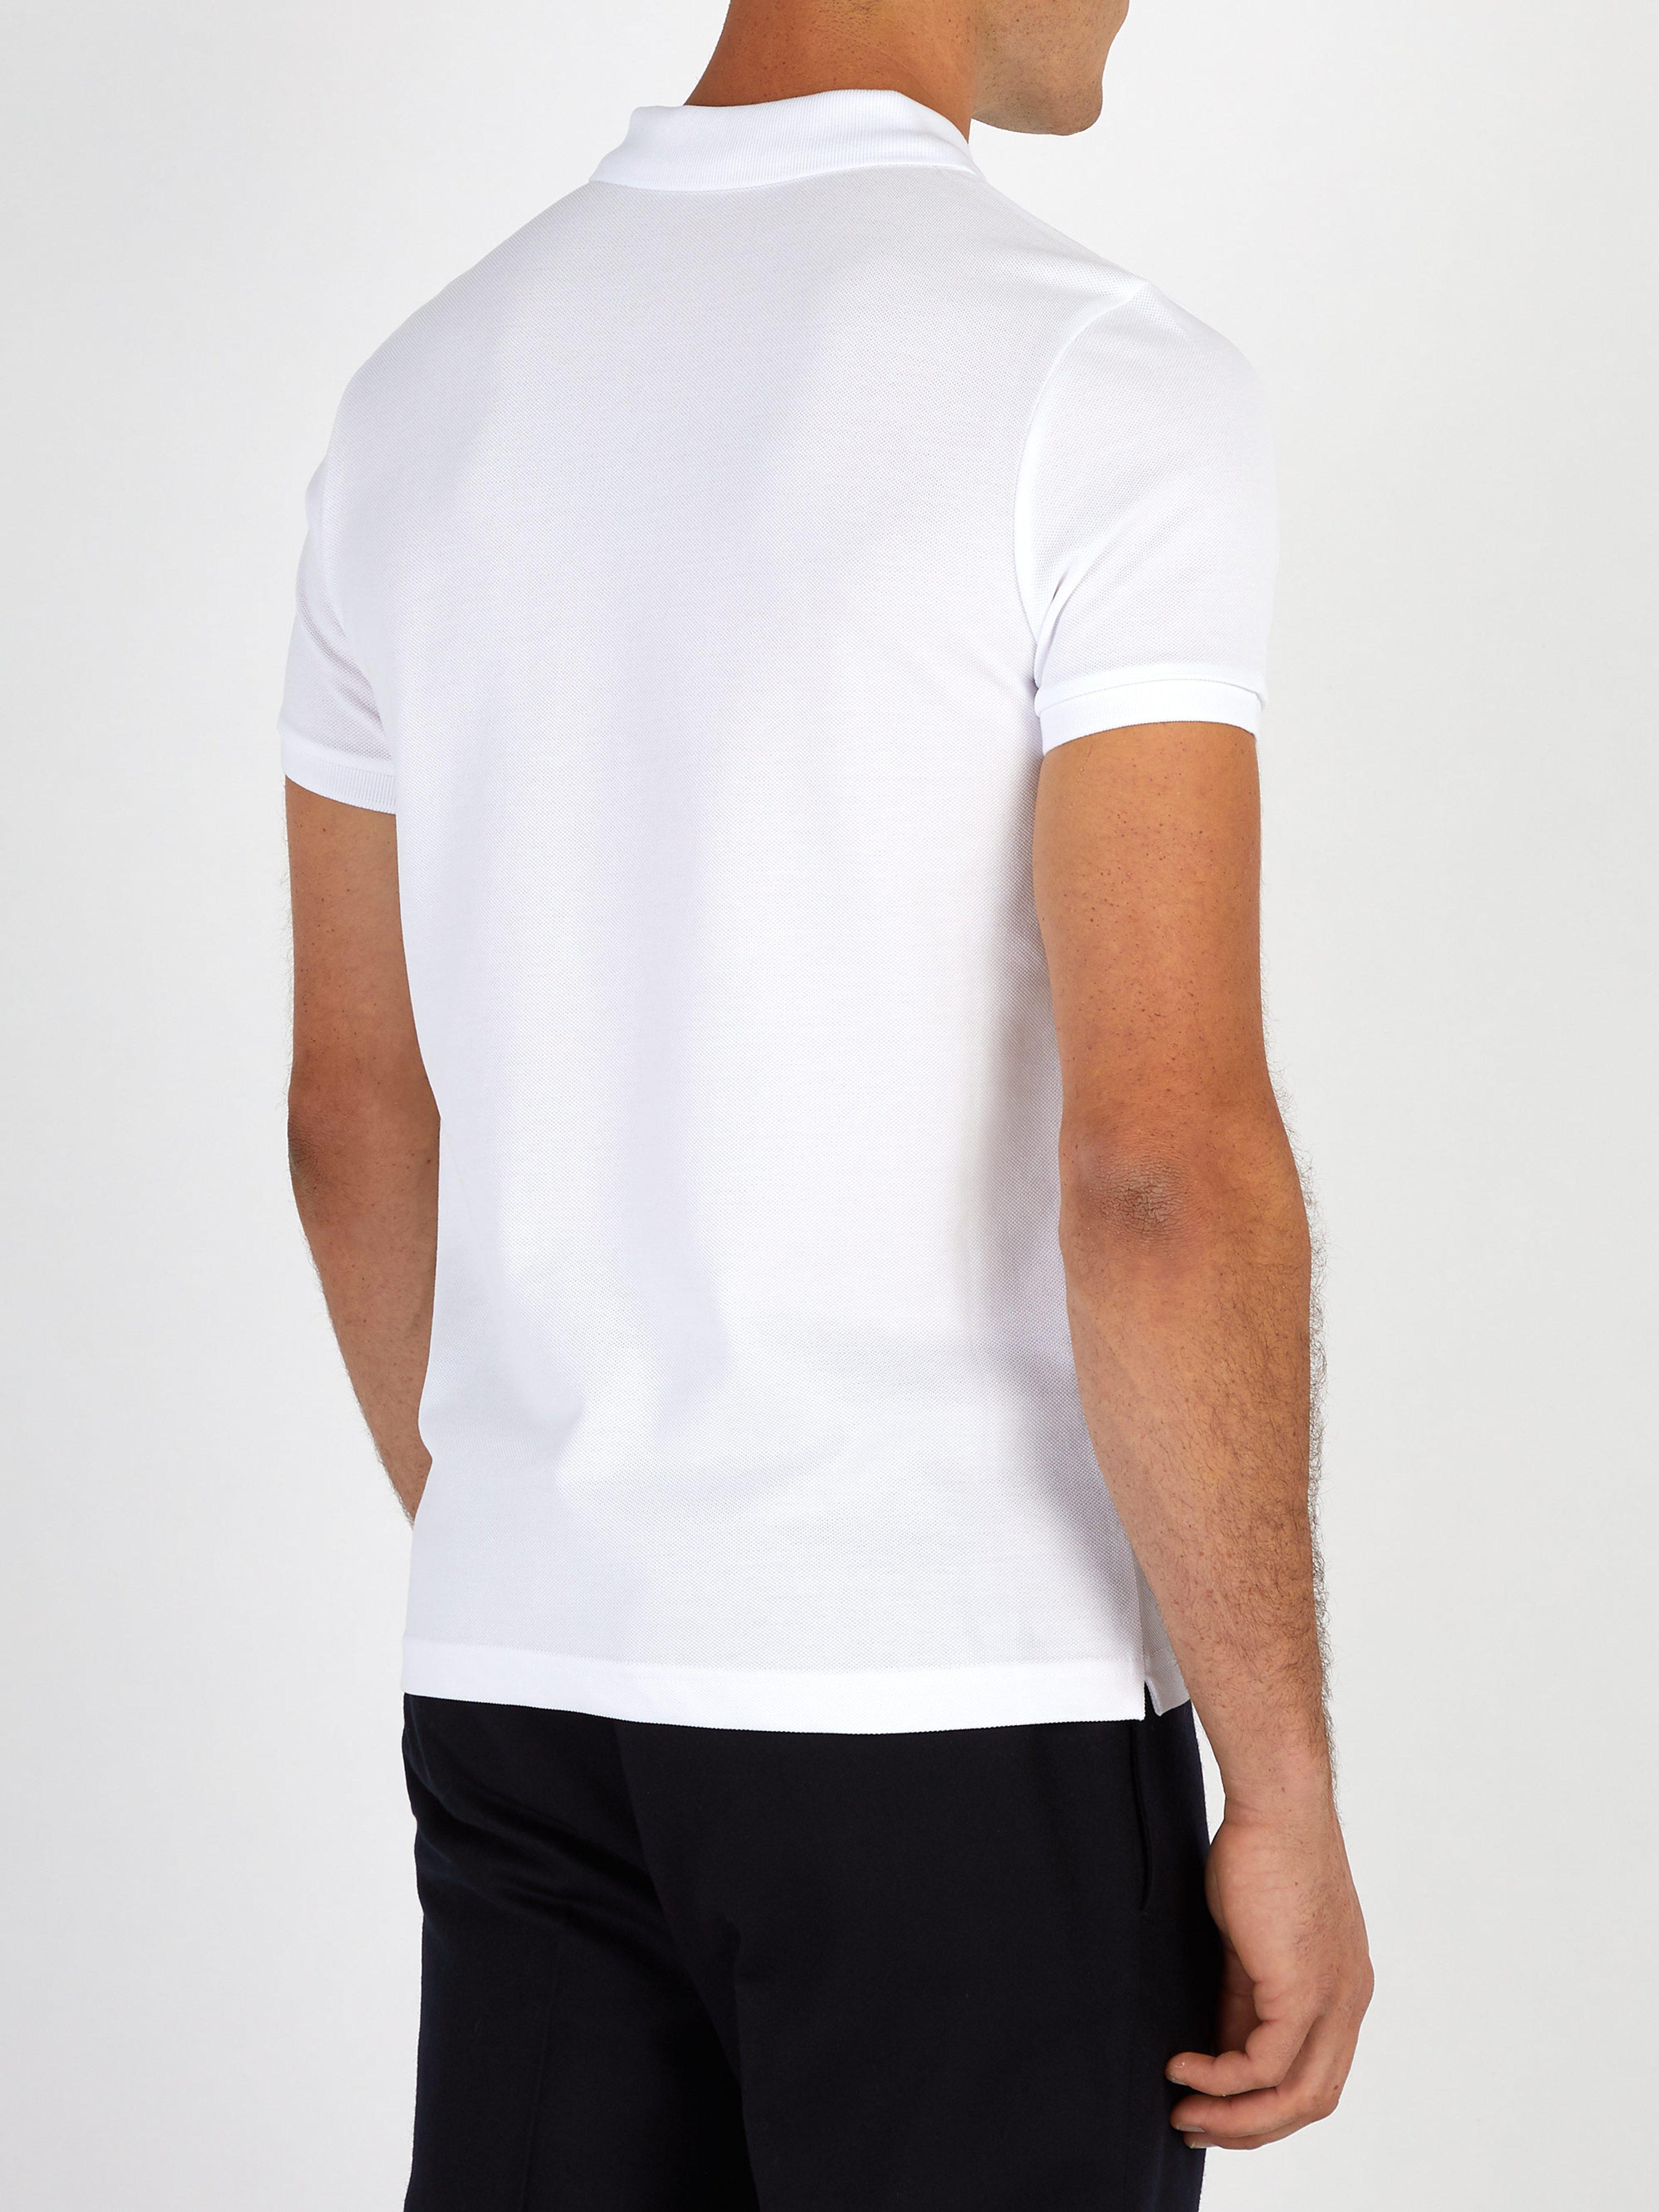 Moncler Double-logo Cotton Polo Shirt in White for Men - Lyst